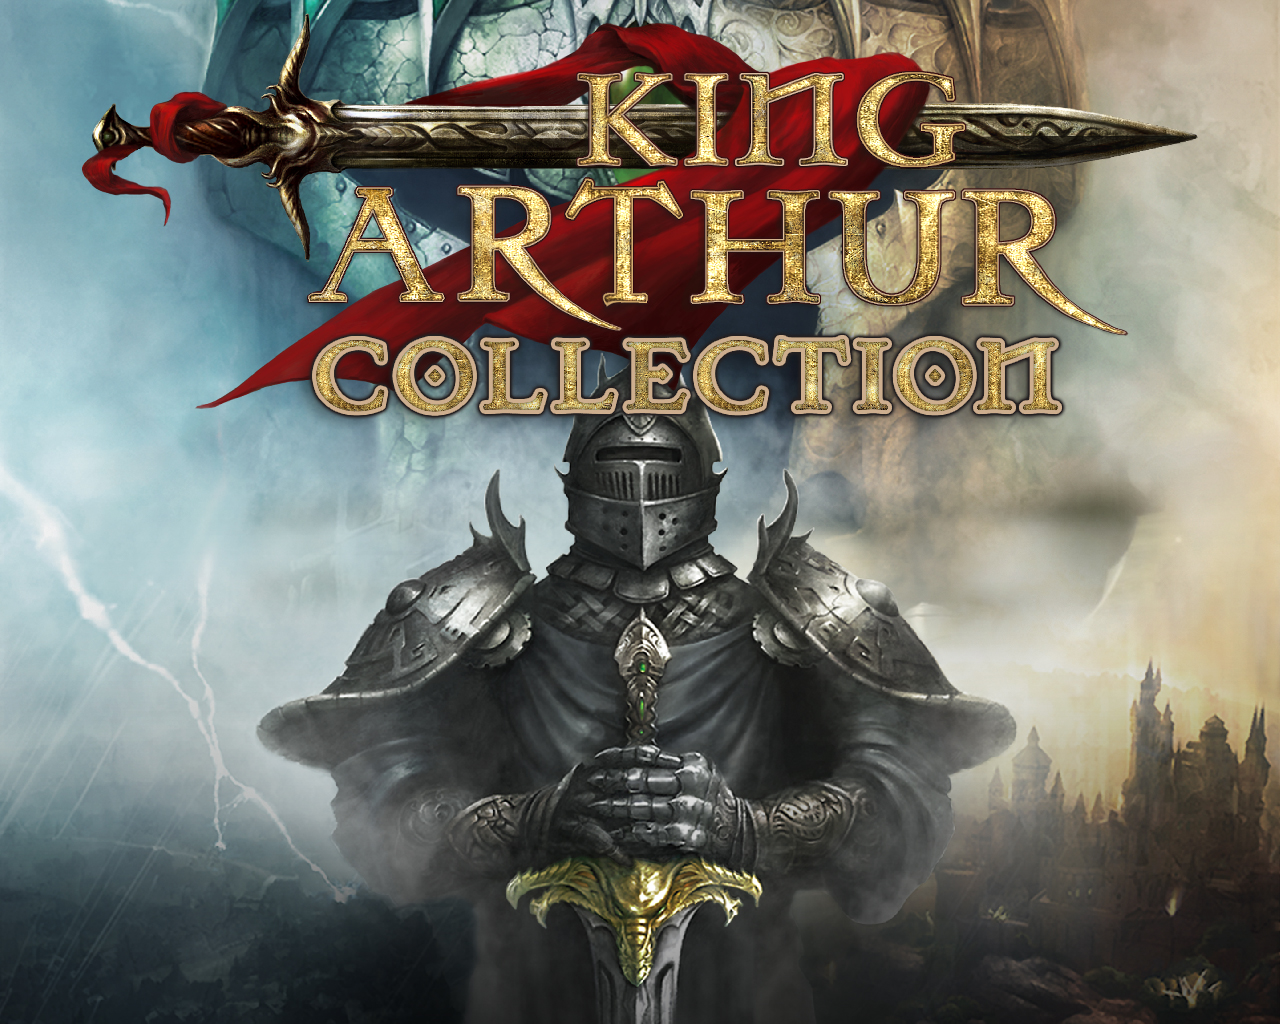 King Arthur: Collection Released on Desura! news.